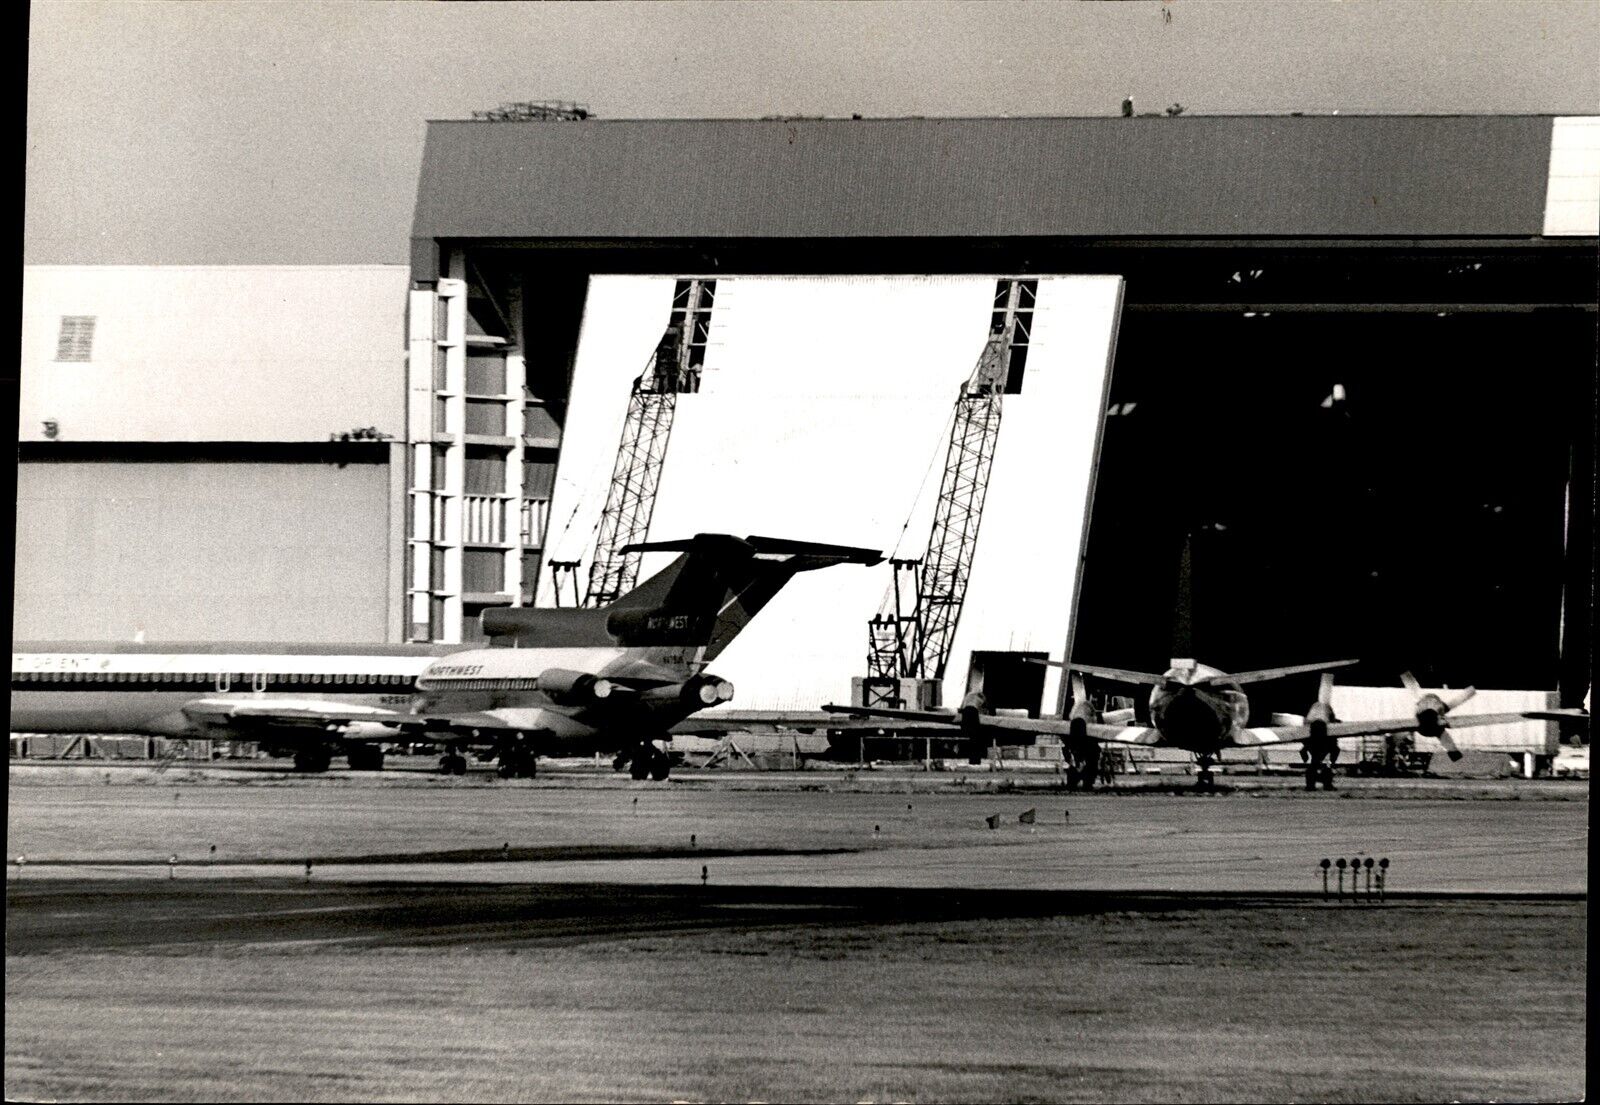 LAE3 1970 Orig C. Bjorgen Photo NORTHWEST AIRLINES HANGAR MPLS-ST PAUL AIRPORT